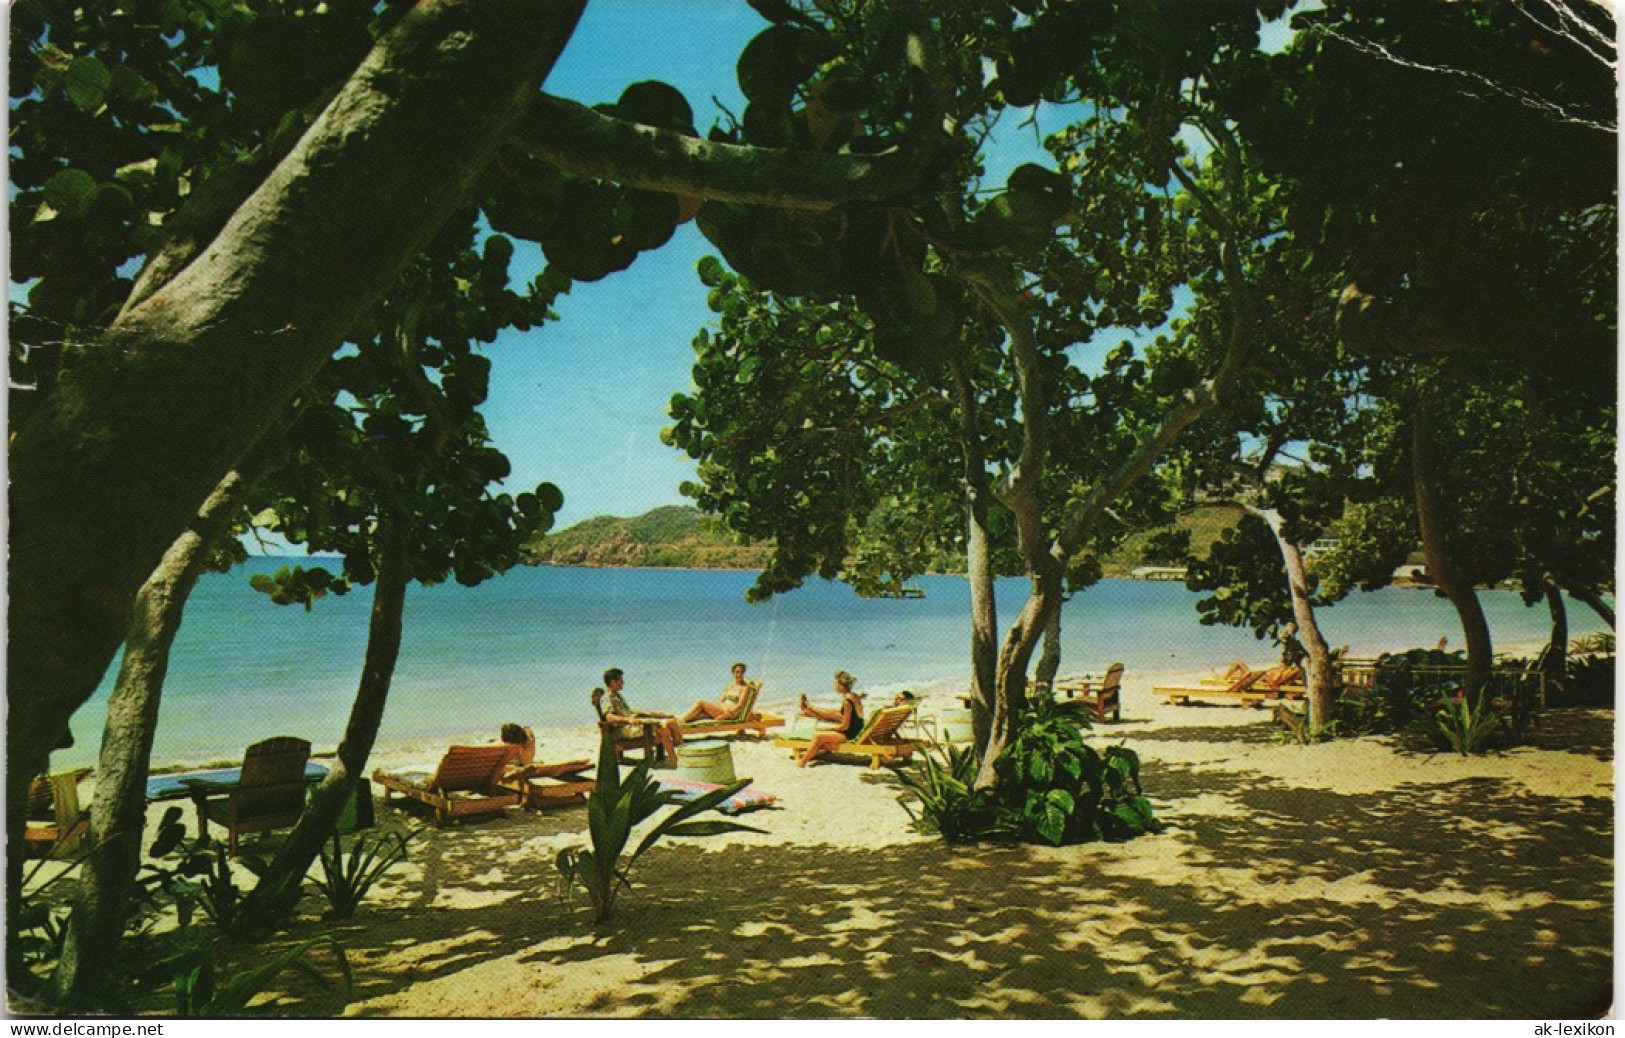 St. Thomas Sankt Thomas ISLAND BEACHCOMBER HOTEL Karibik Caribean Sea 1964 - Islas Vírgenes Americanas